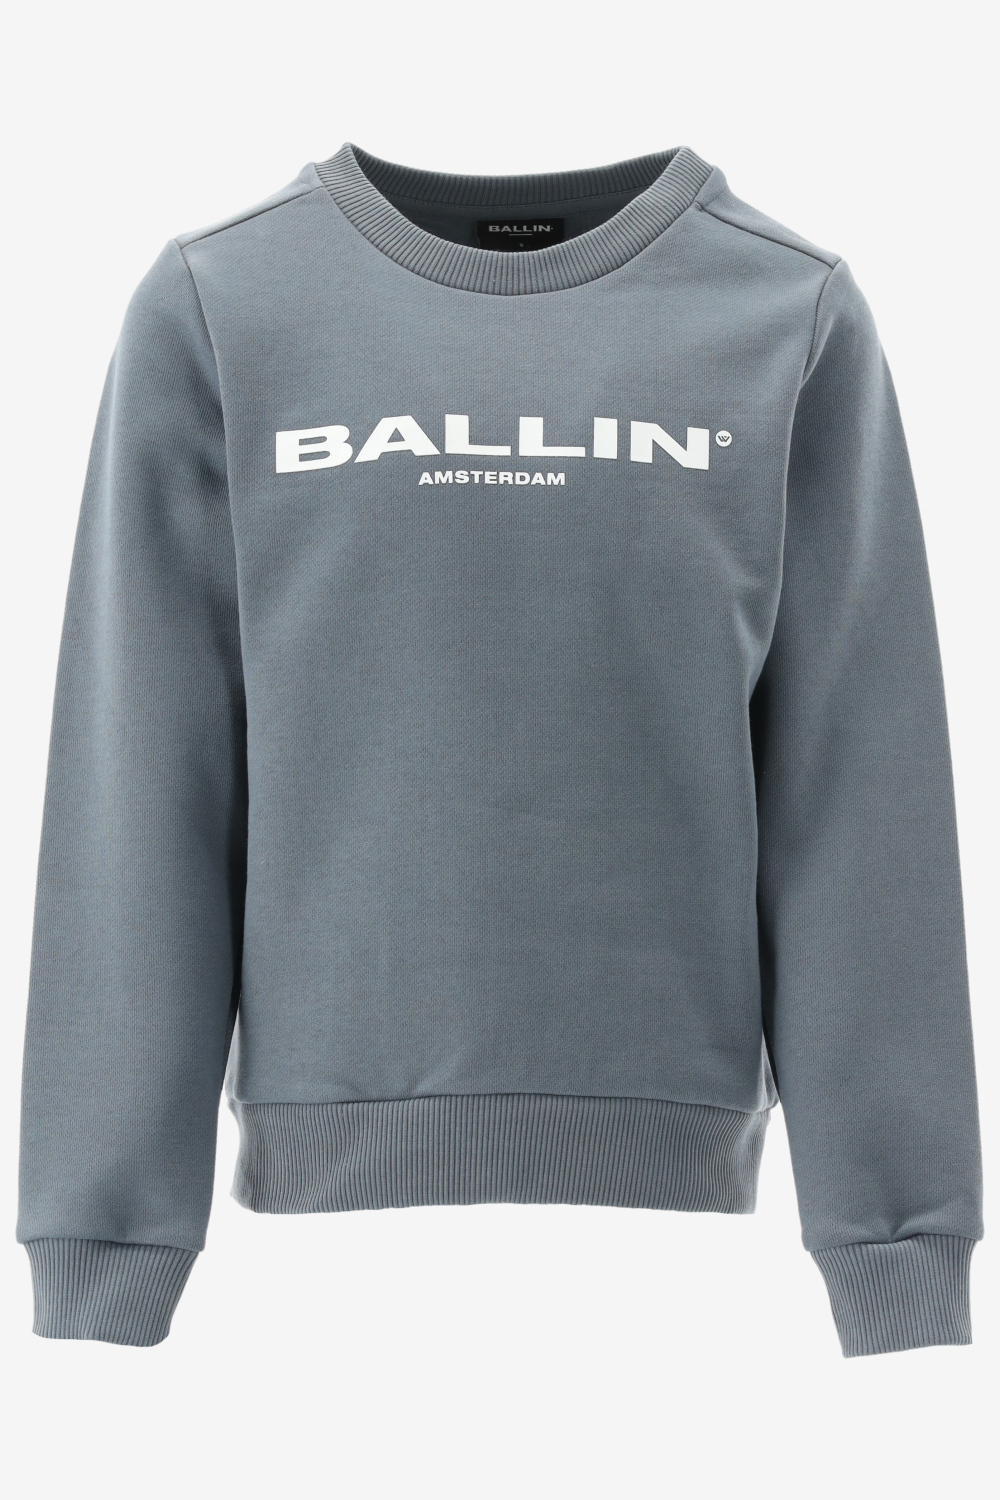 Ballin Amsterdam -  Jongens Slim Fit  Original Sweater  - Blauw - Maat 164